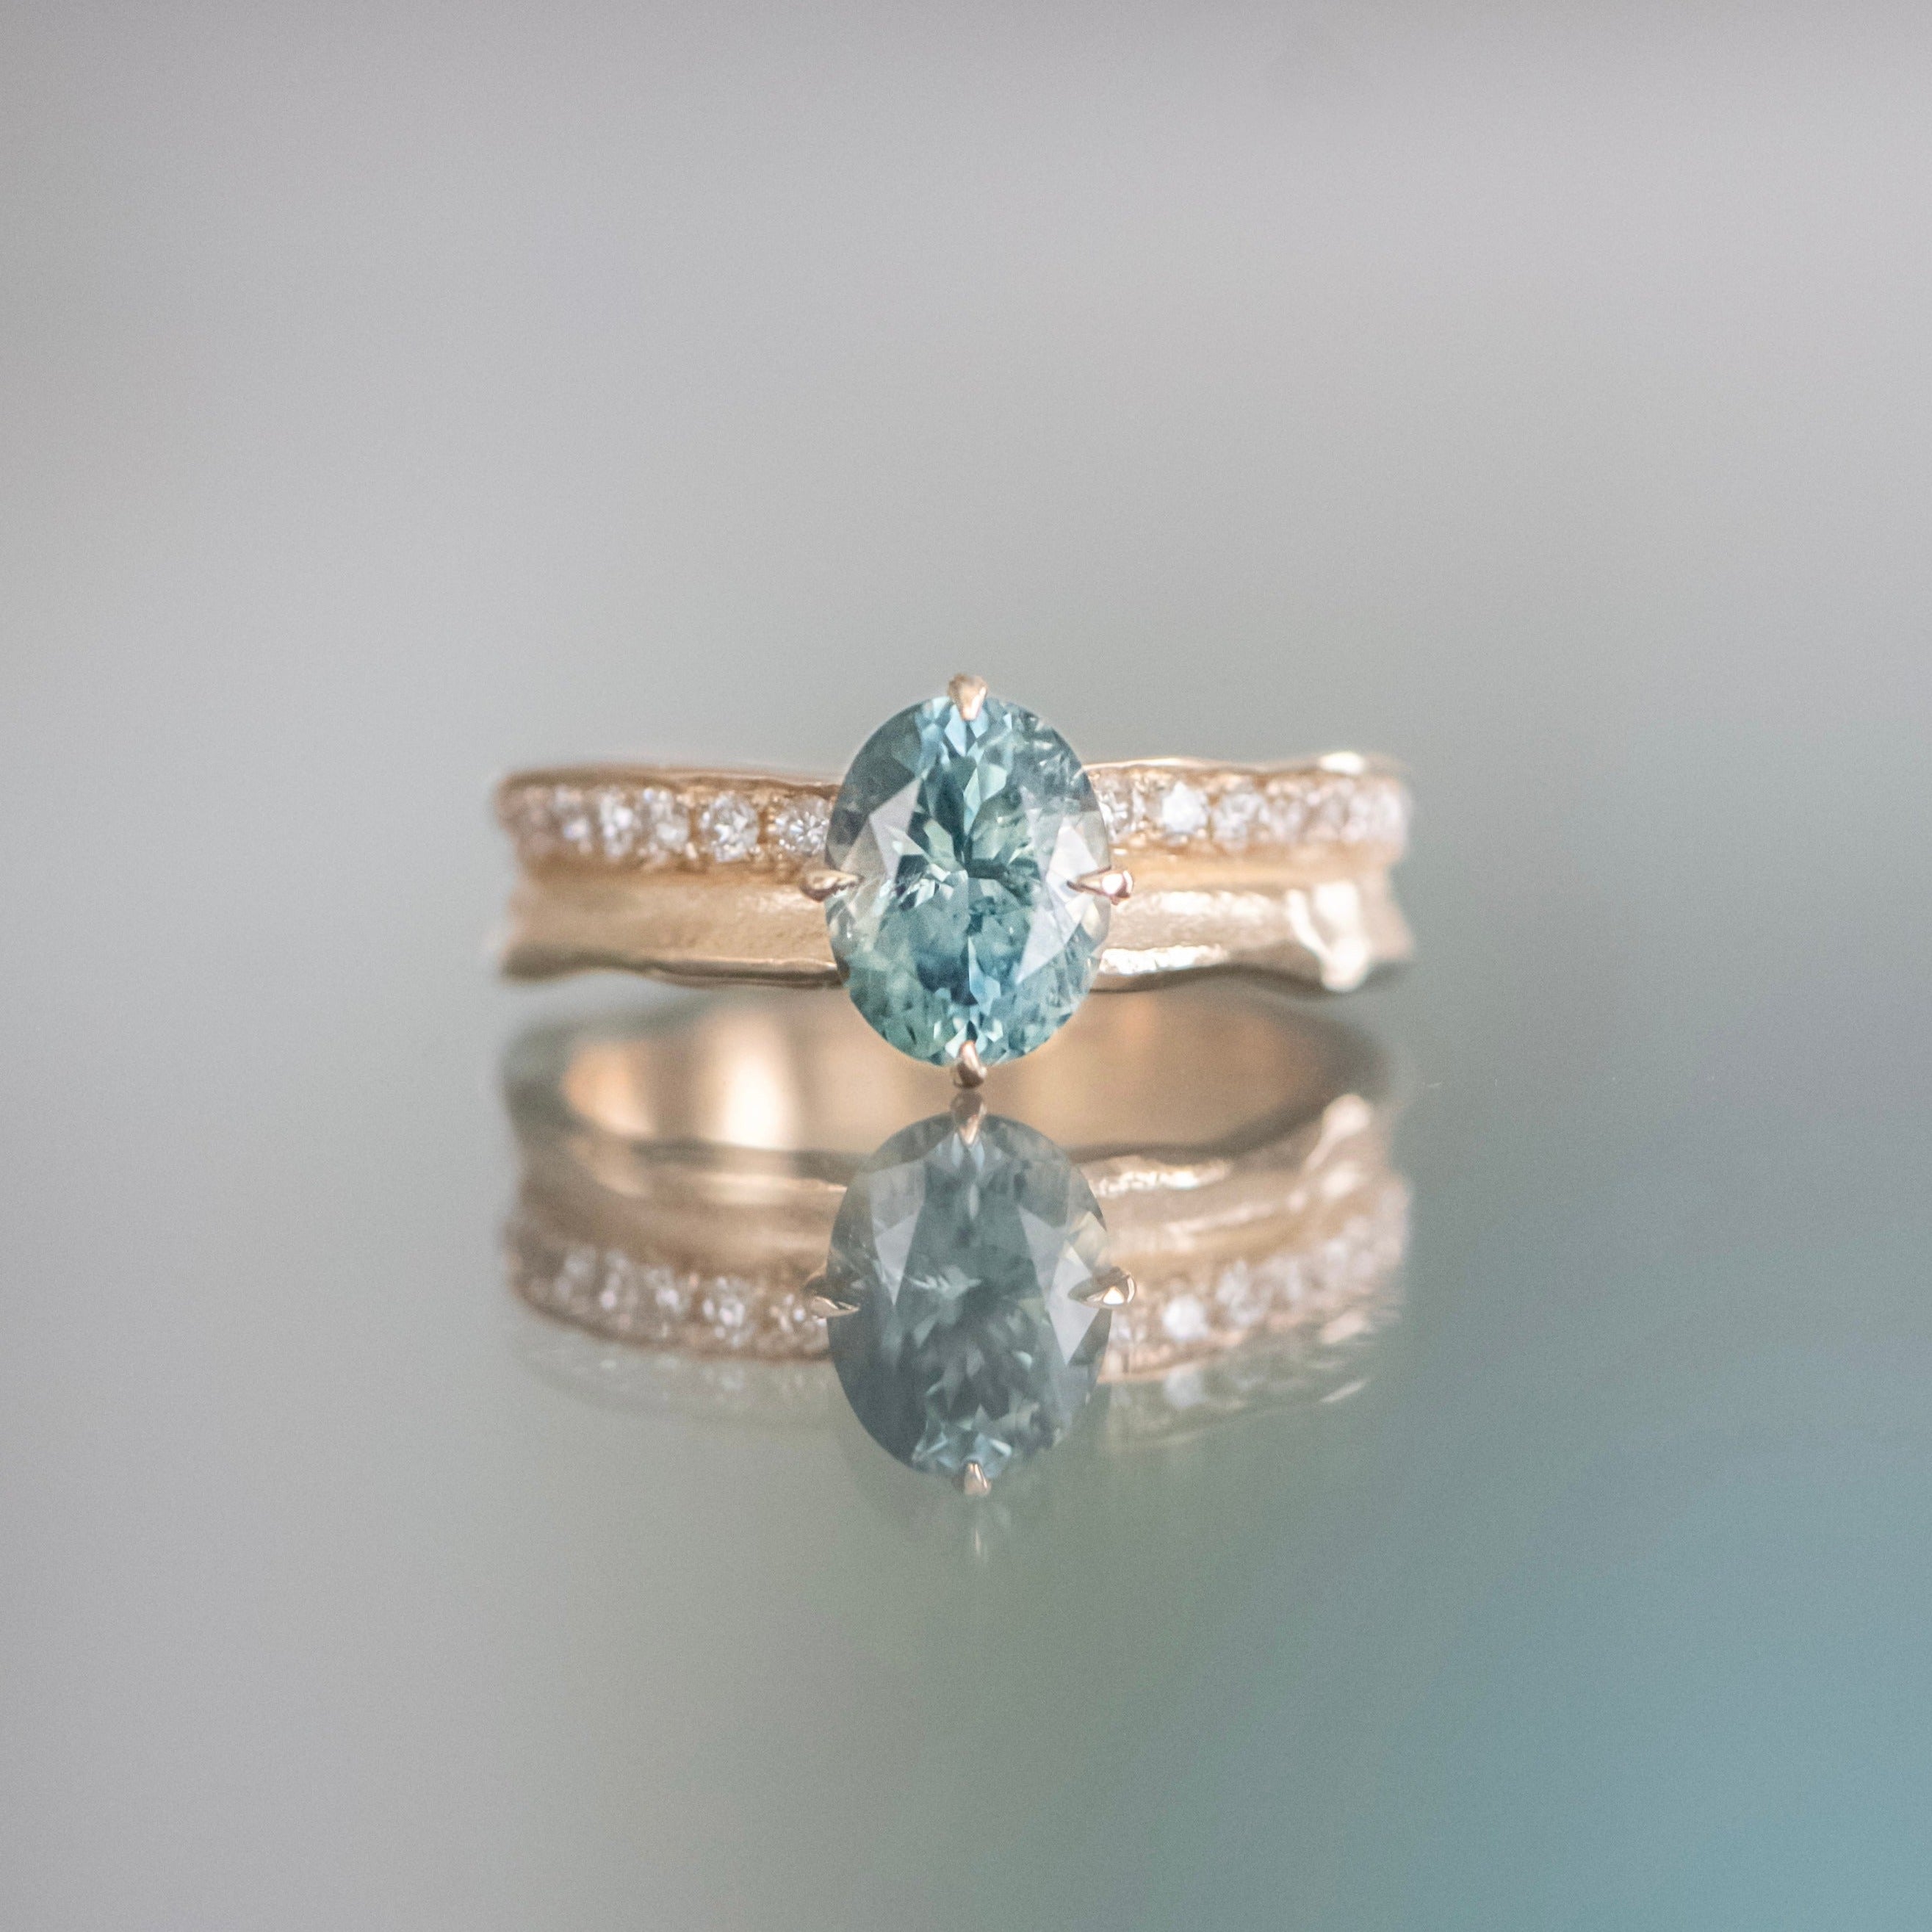 Black Diamond Engagement Rings - Canadian Engagement Rings